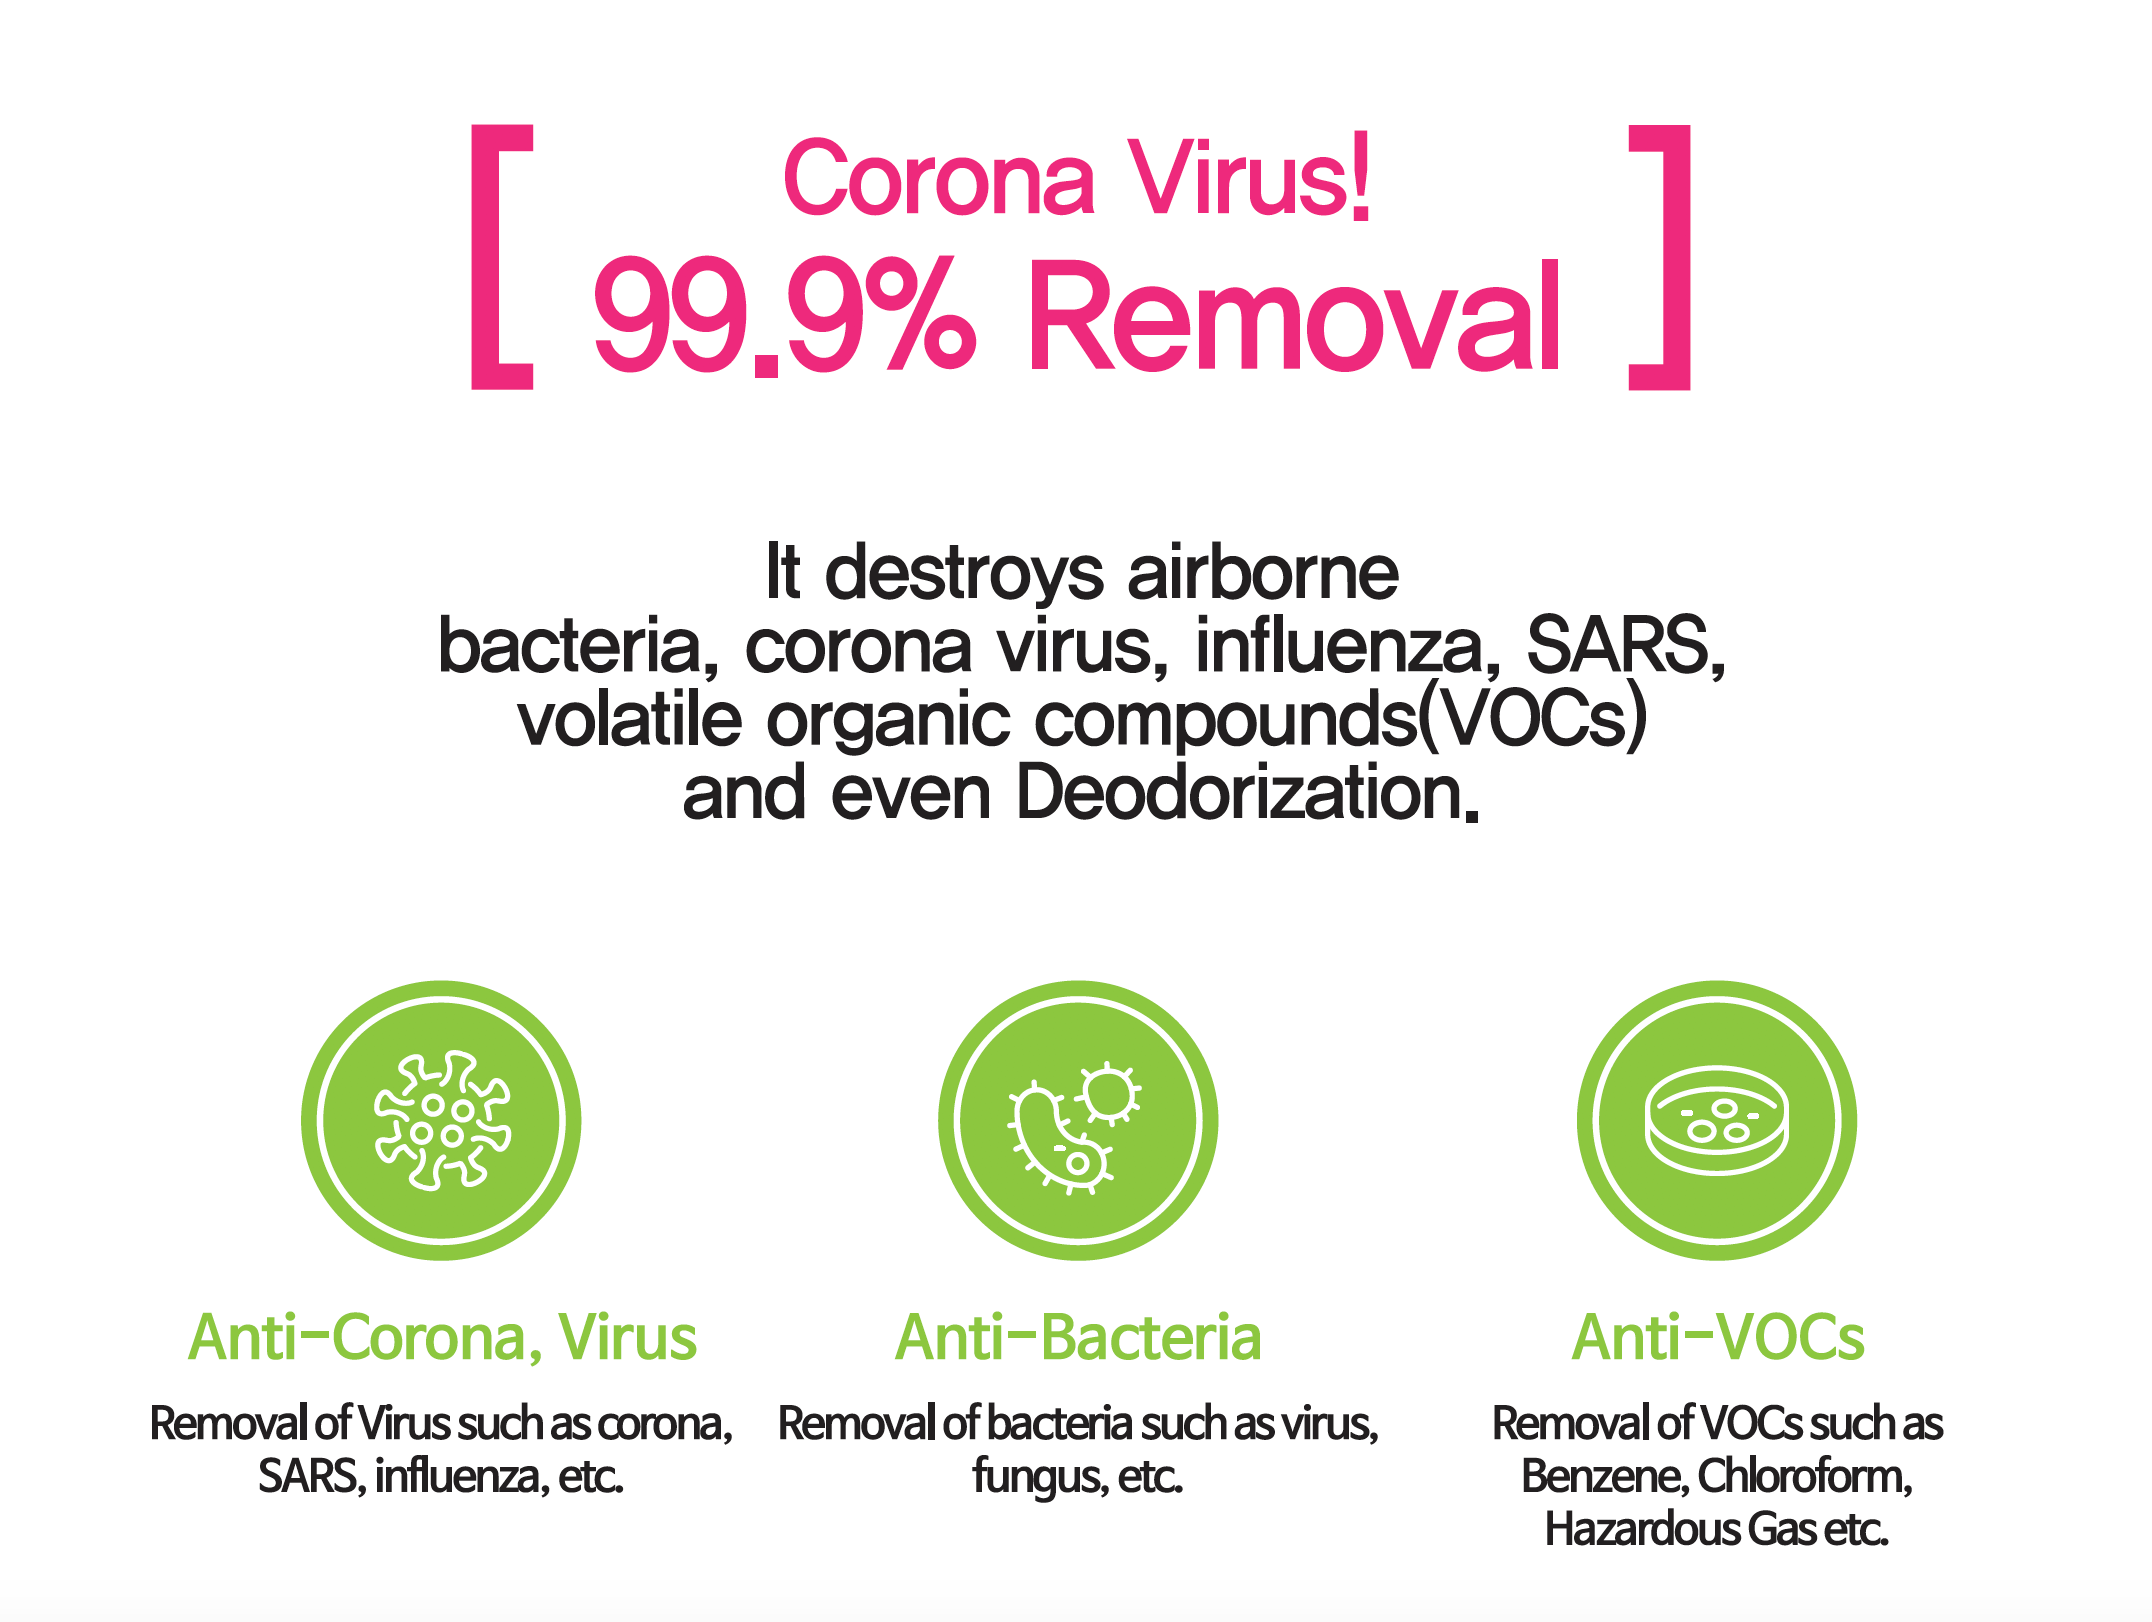 [COMM.TOGETHER] The very First Corona virus sterilizer, Bio-Plasma Purifier – FDA registered